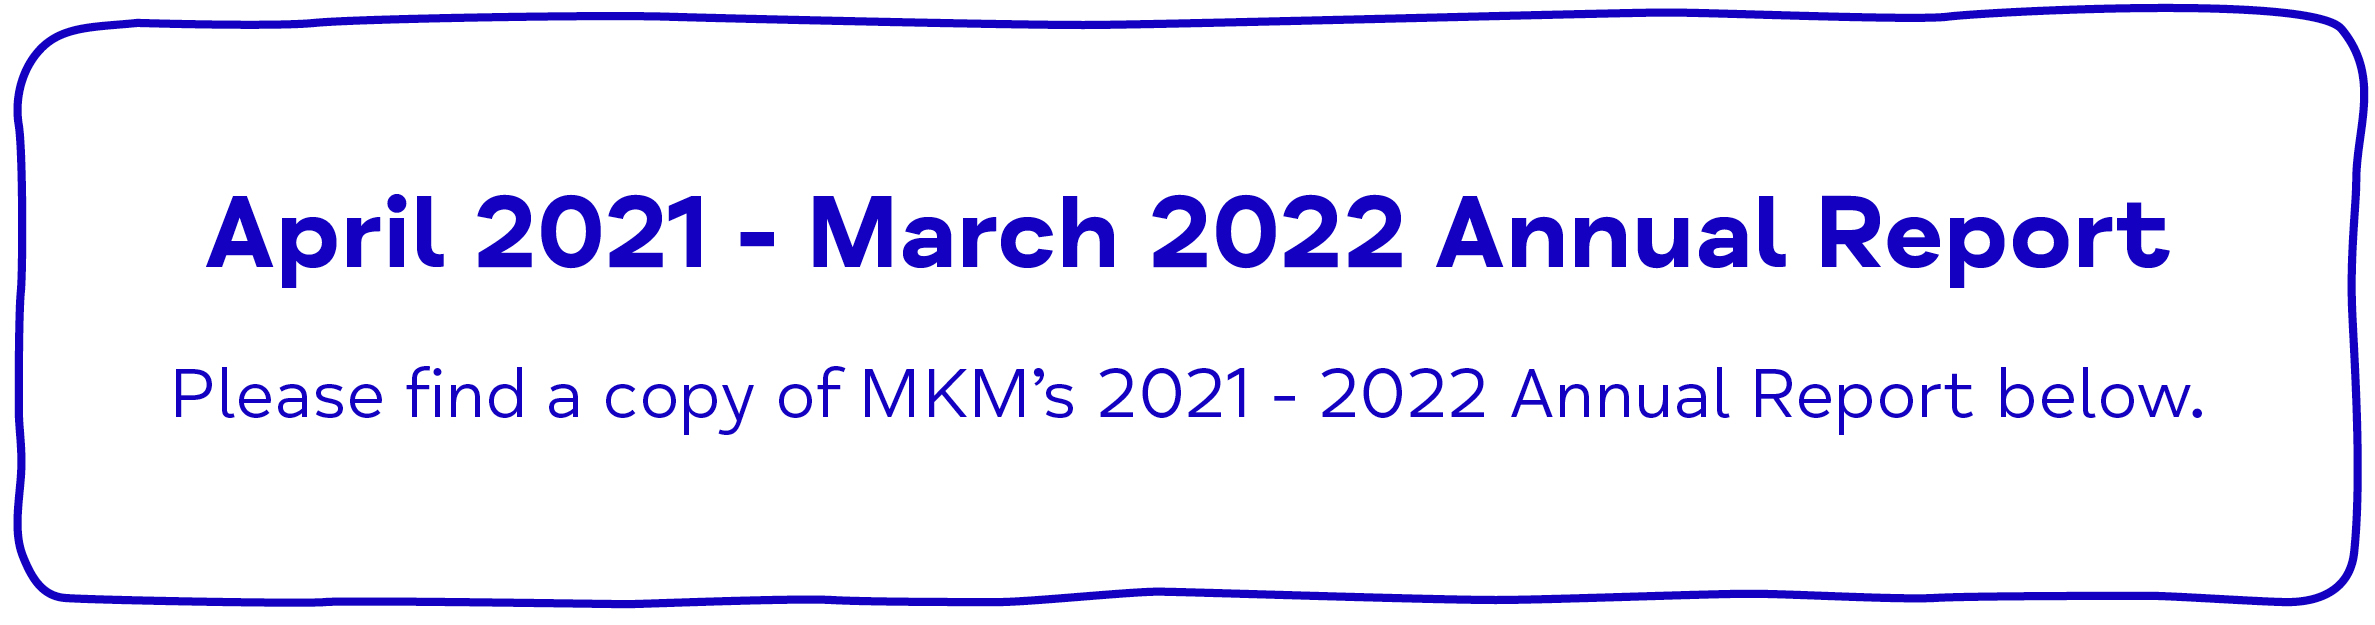 April 2021 - March 2022 Annual Report Please find a copy of MKM’s 2021 - 2022 Annual Report below.